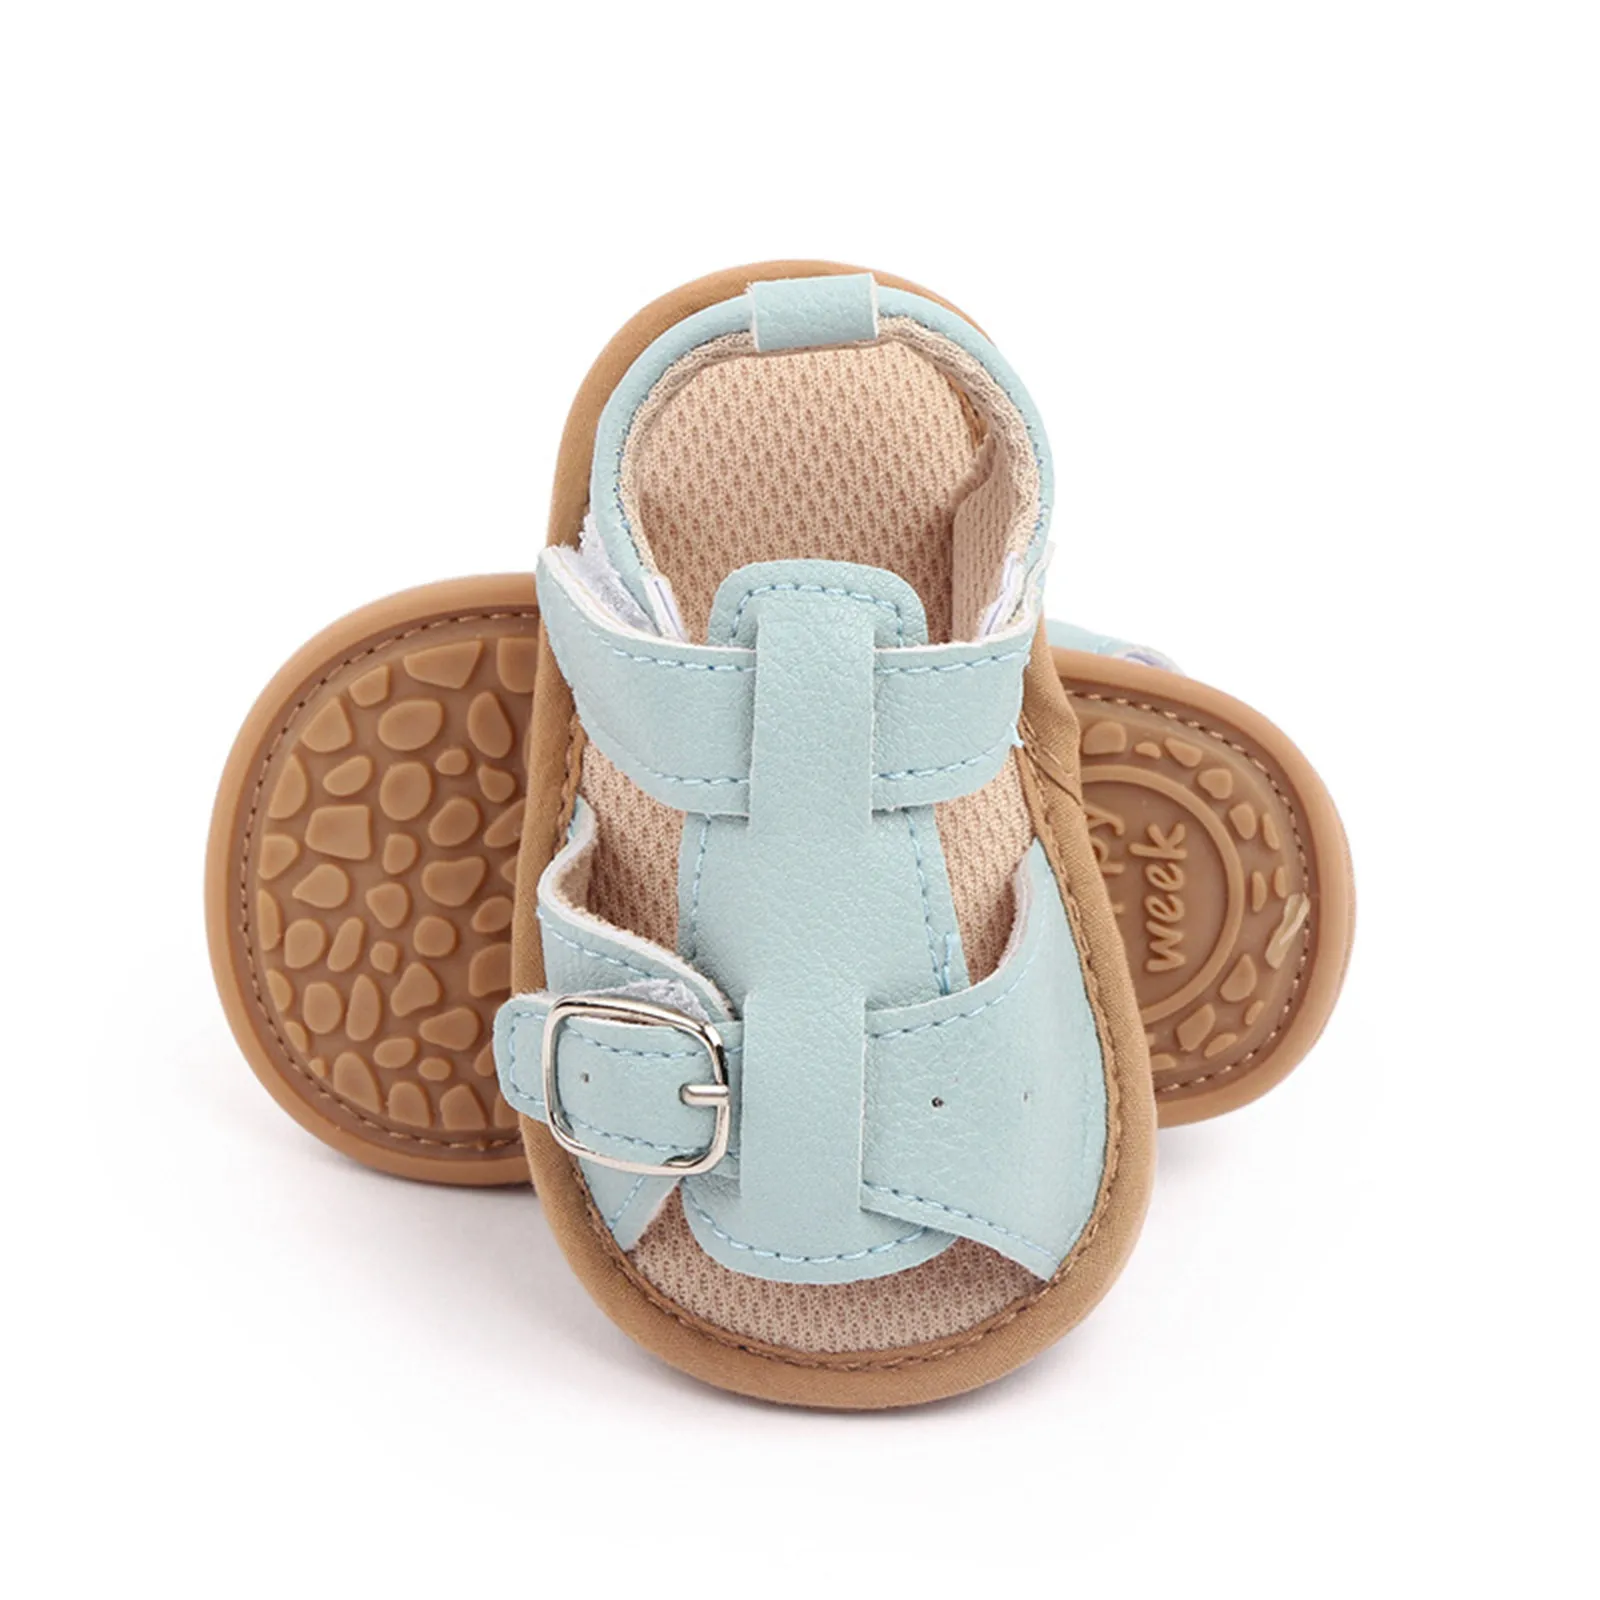 Sepatu bayi perempuan 3-18 bulan, sandal bayi musim panas, sepatu bayi perempuan warna polos lembut dengan gesper, sepatu bayi pertama jalan